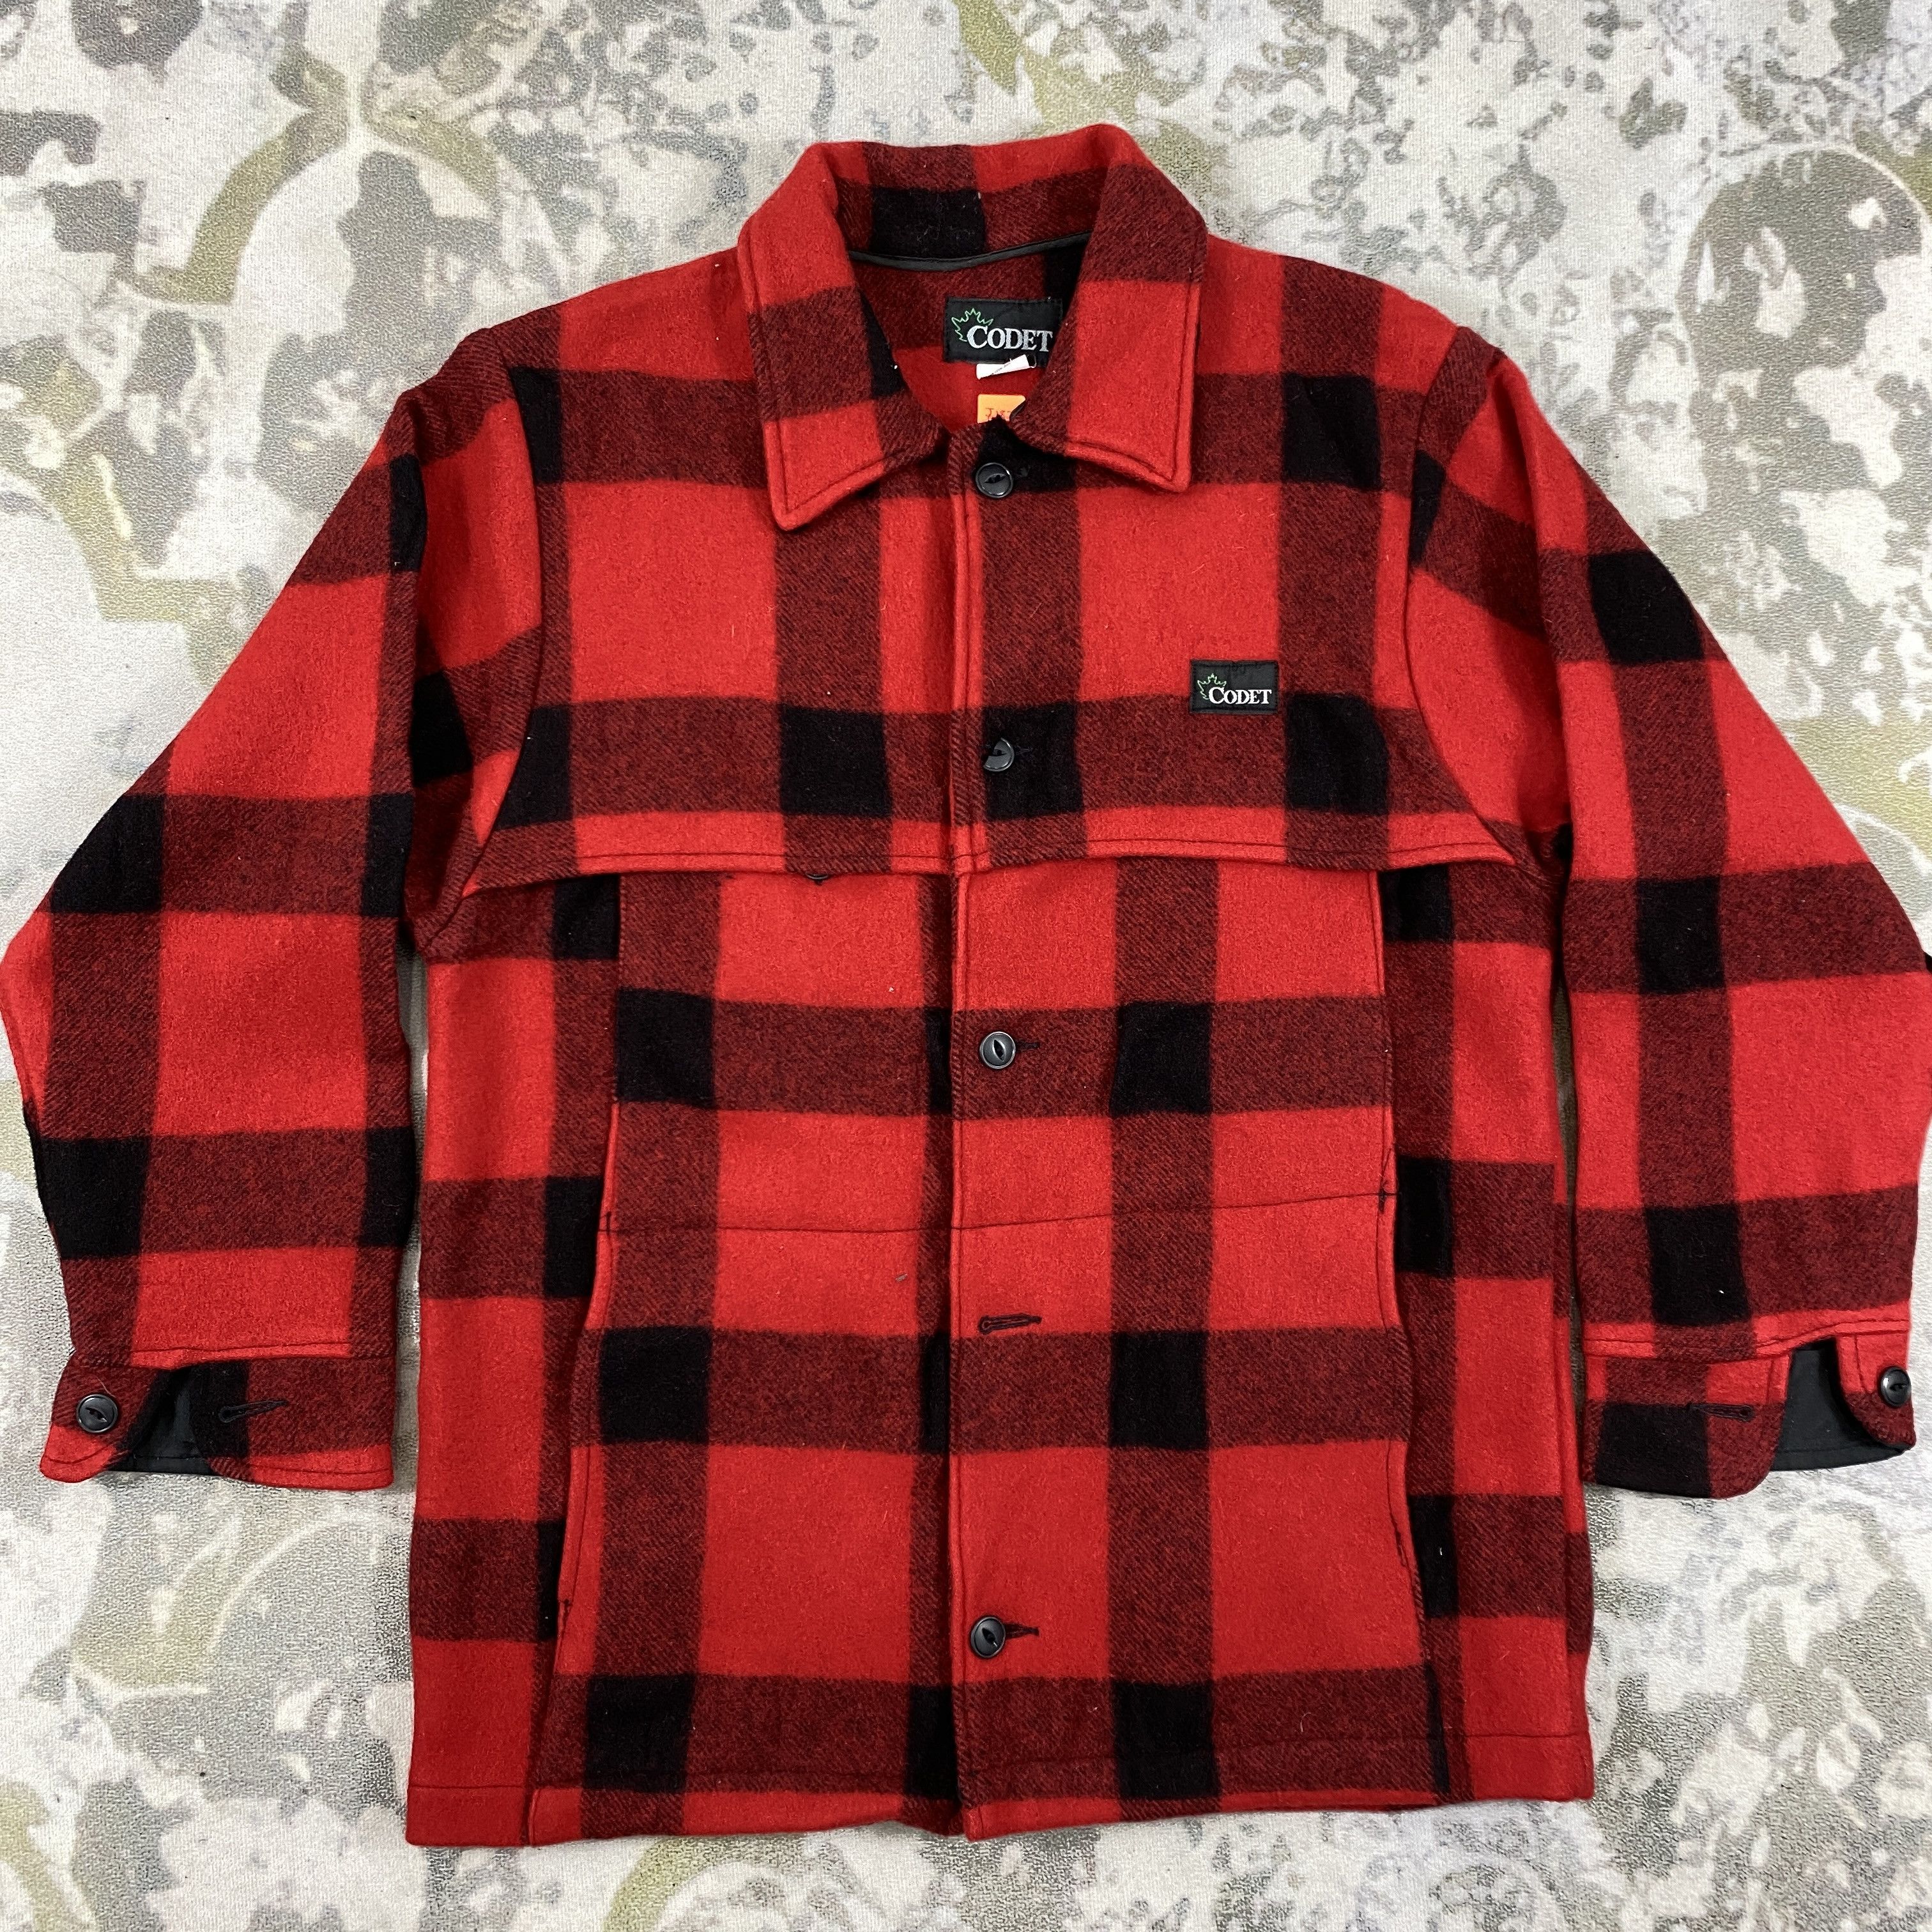 Japanese Brand Codet Red Wool Flannel Plaid Jacket - J182 | Grailed